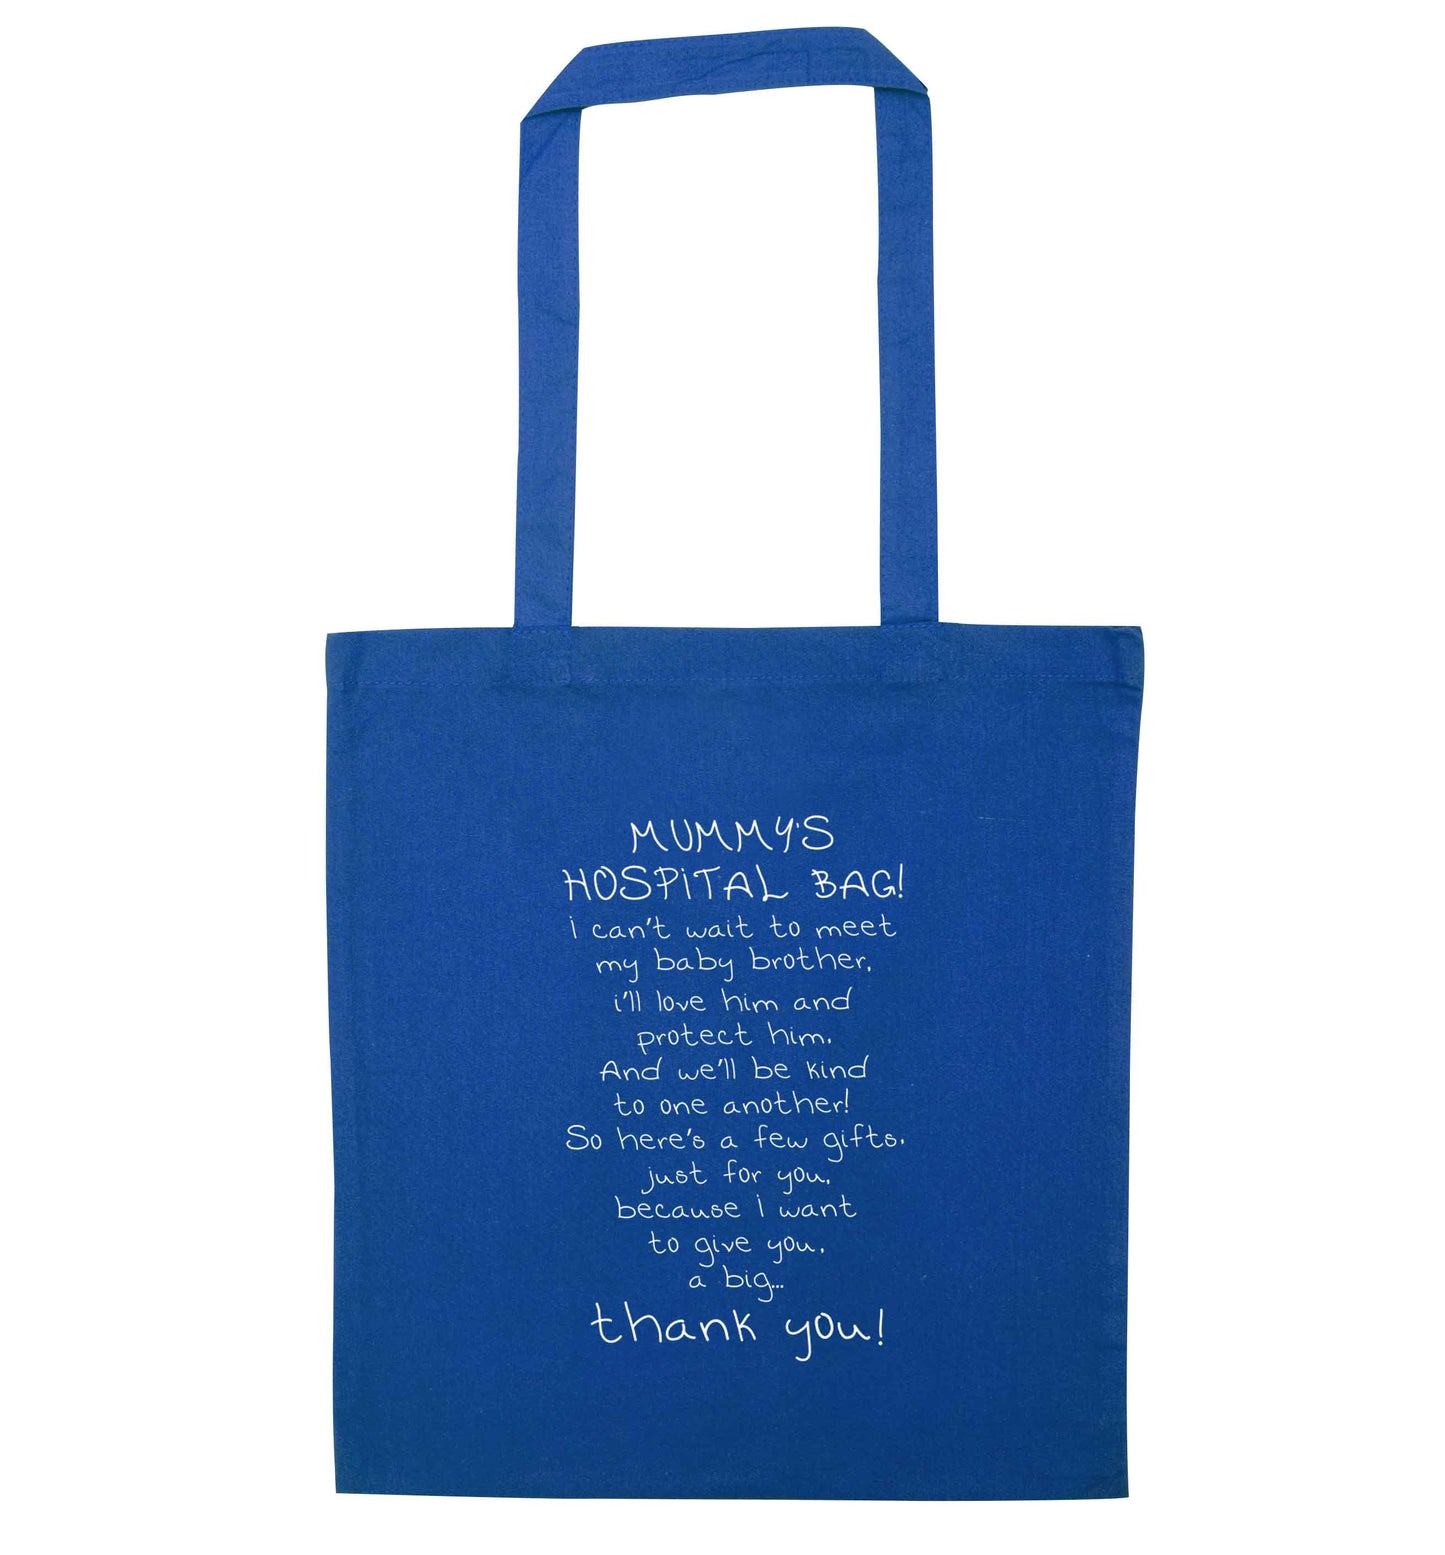 Mummy's hospital bag poem baby brother blue tote bag